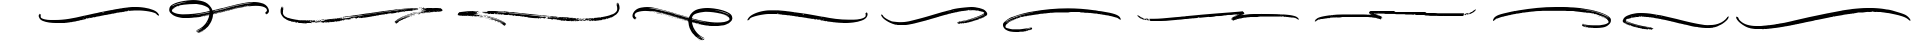 Hinterlands Signature Brush Font Font LOWERCASE